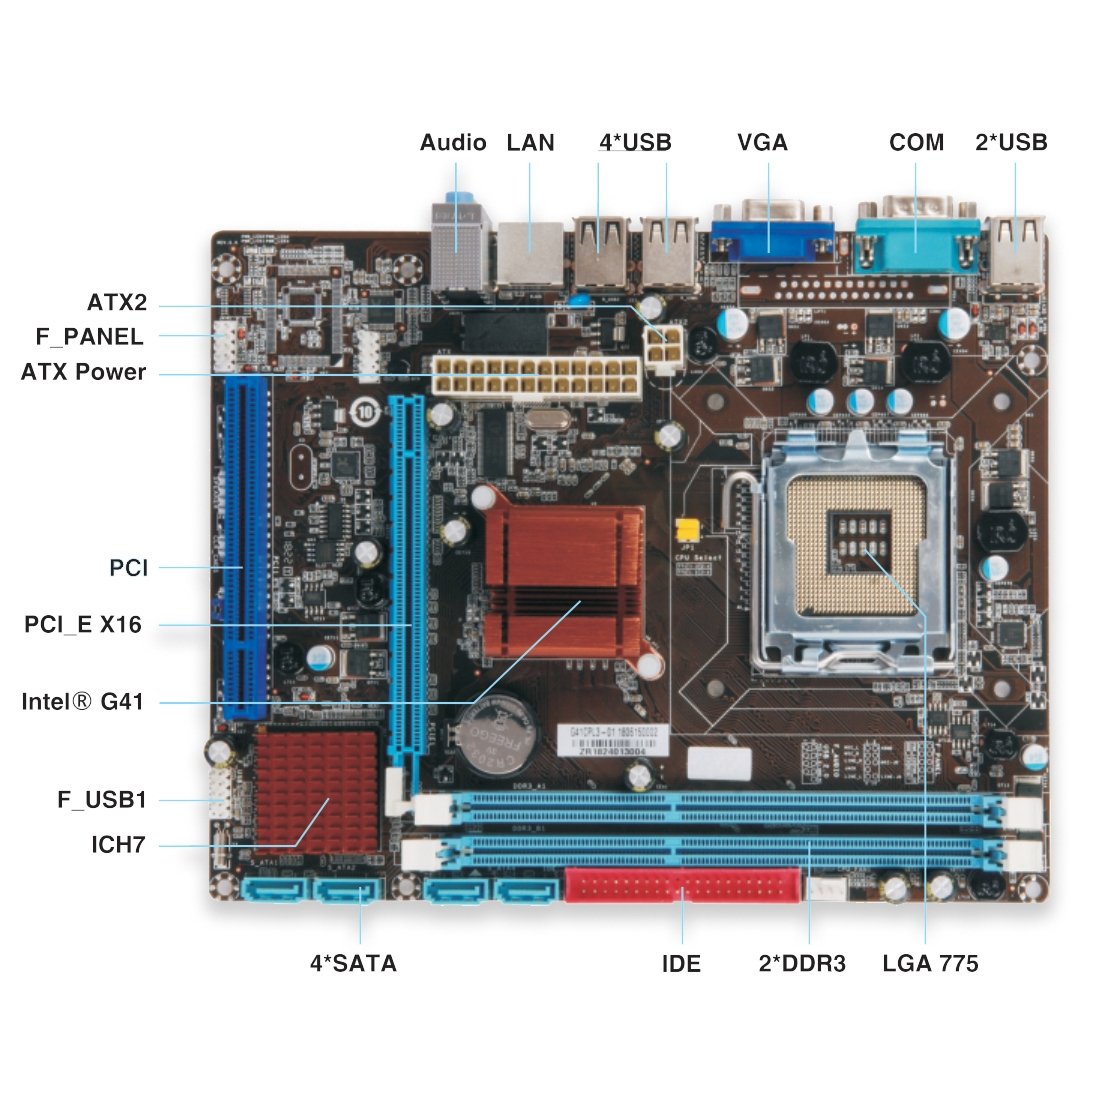 EVMG41-DDR3